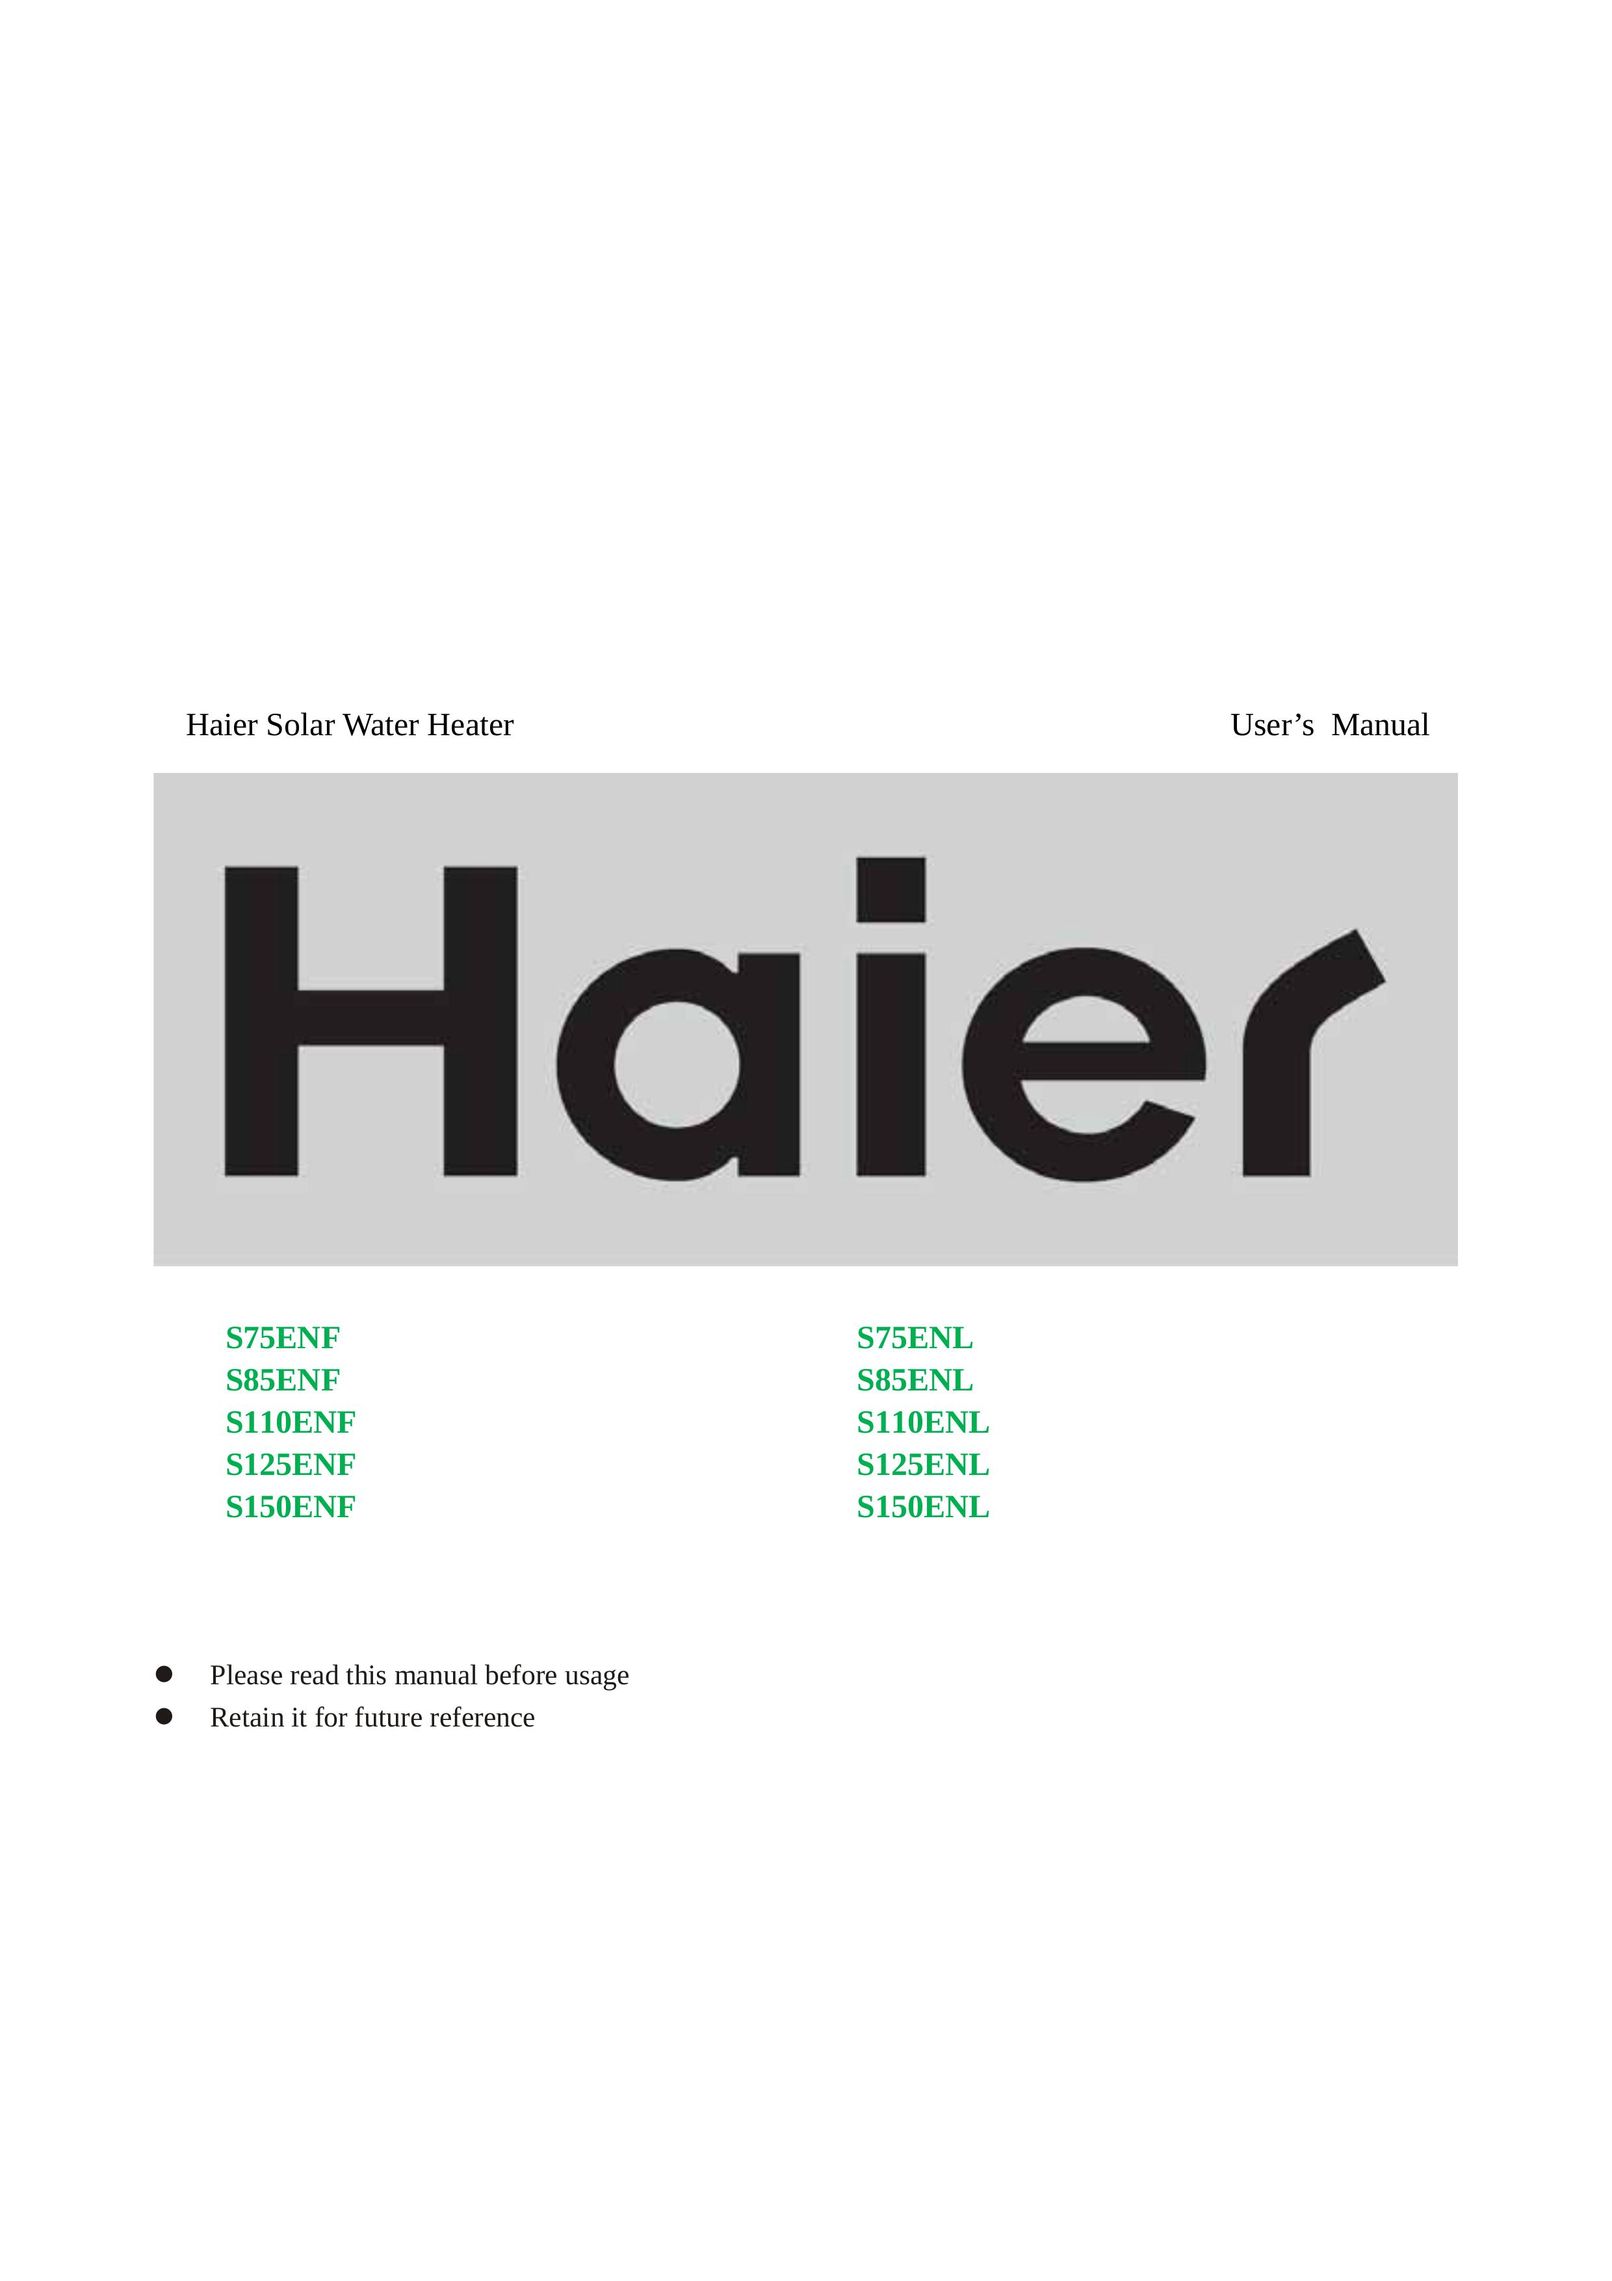 Haier S125ENF Water Heater User Manual